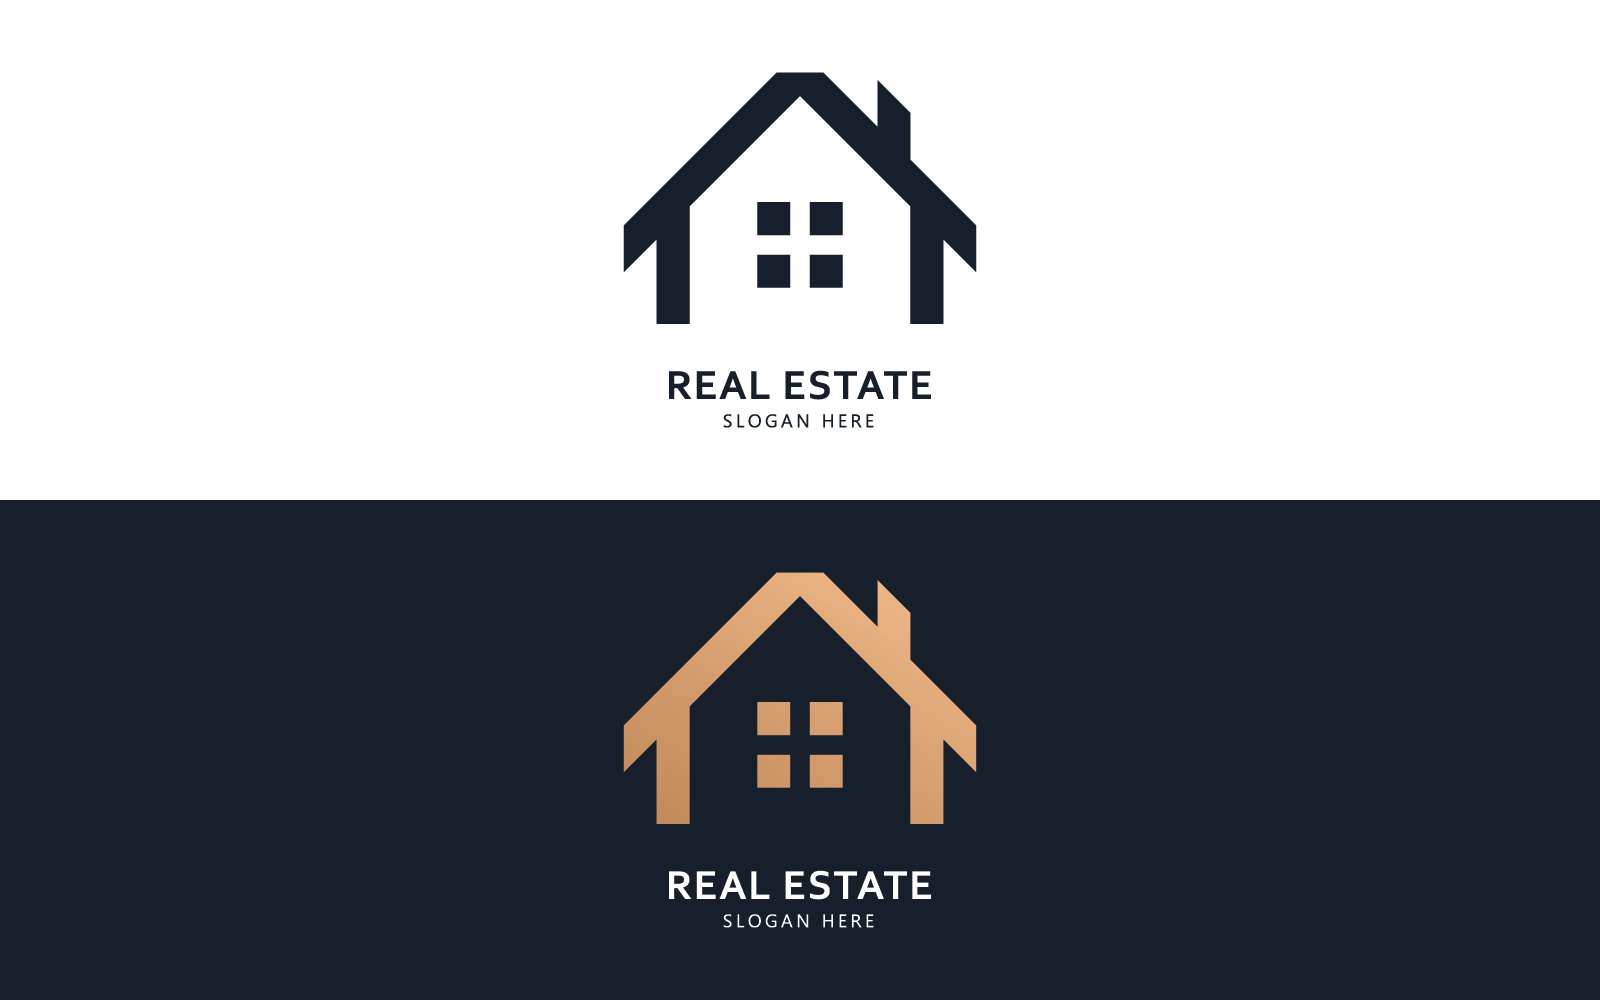 Real estate logo and icon design concept V8